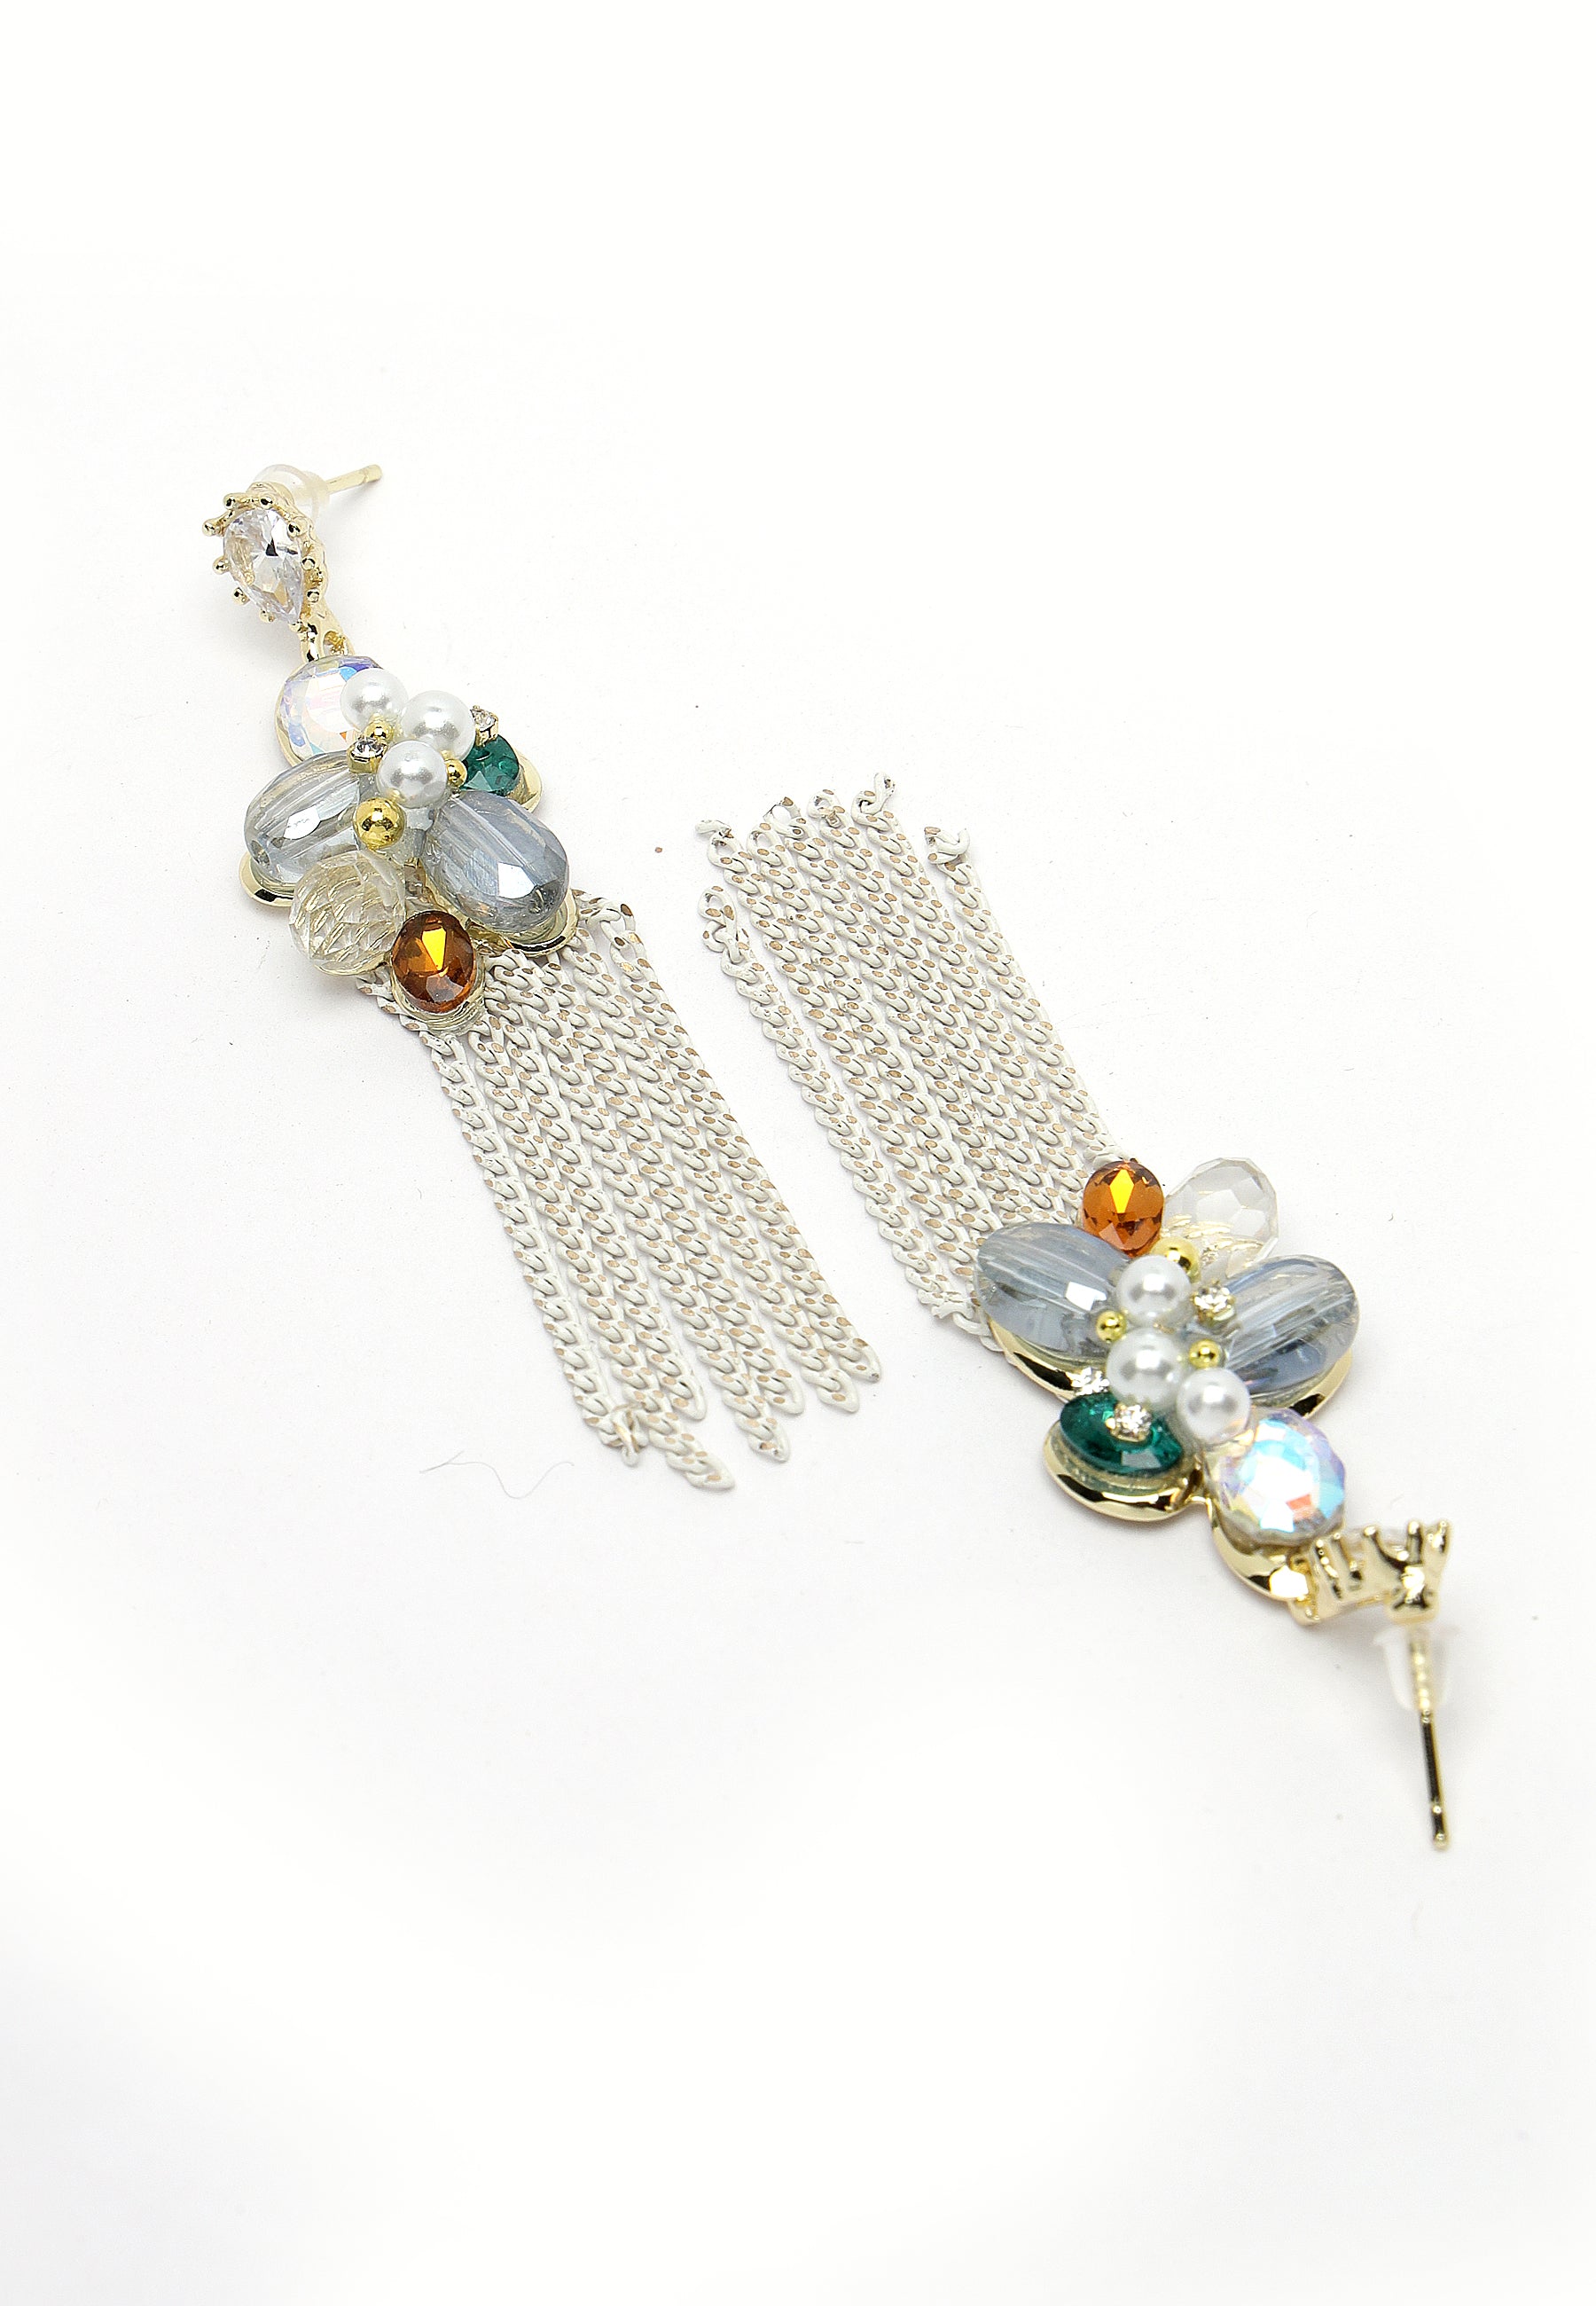 Multi-Colored Crystal Long Chain Dangler Earrings